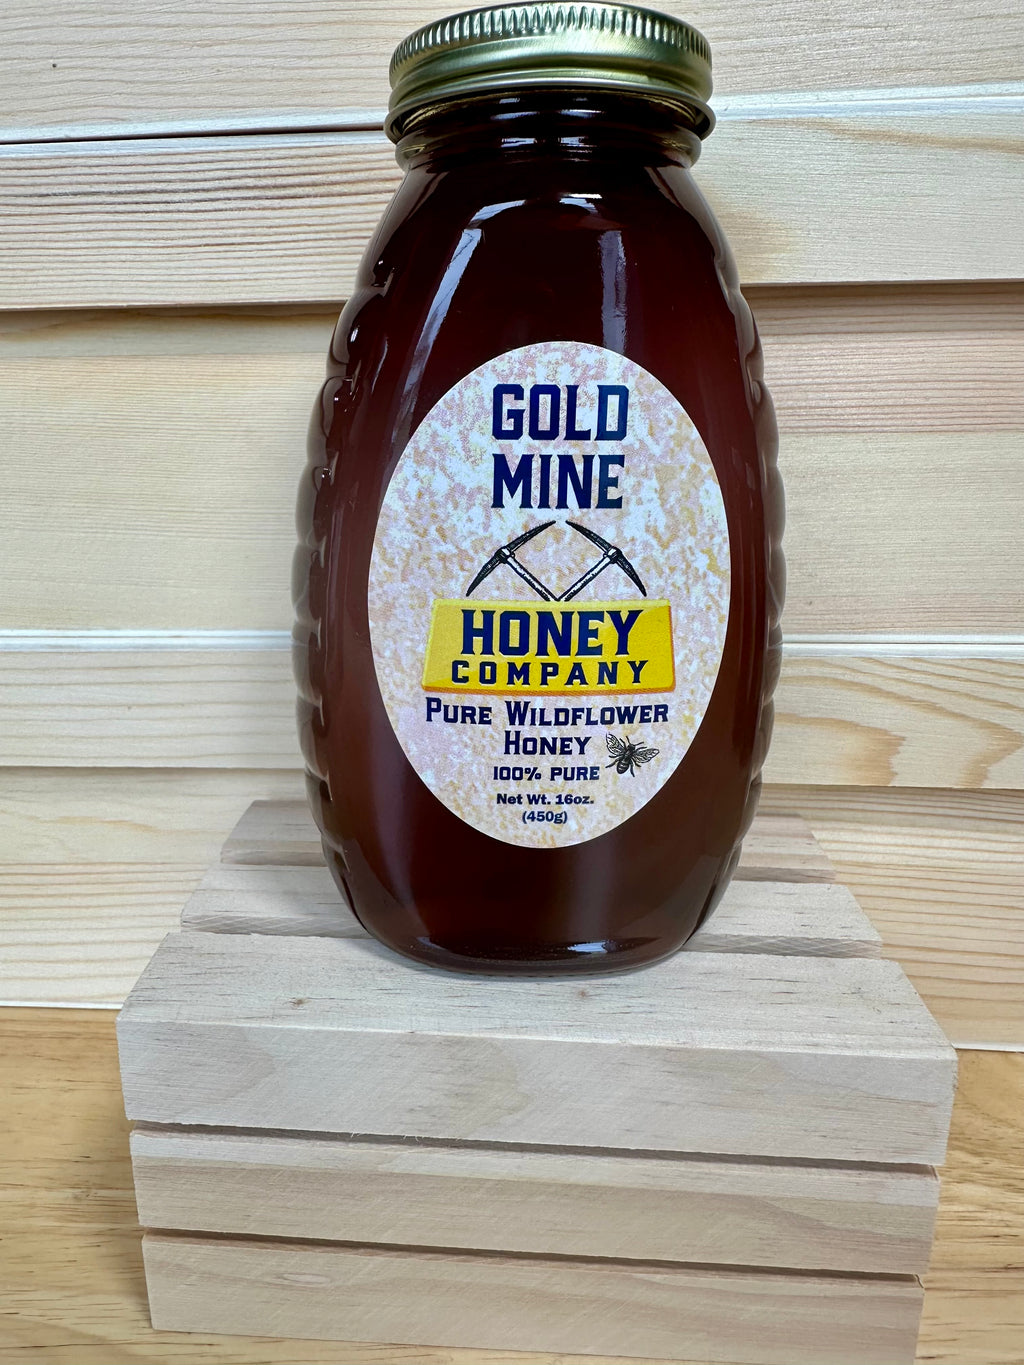 wildflower Honey - gold mine honey company